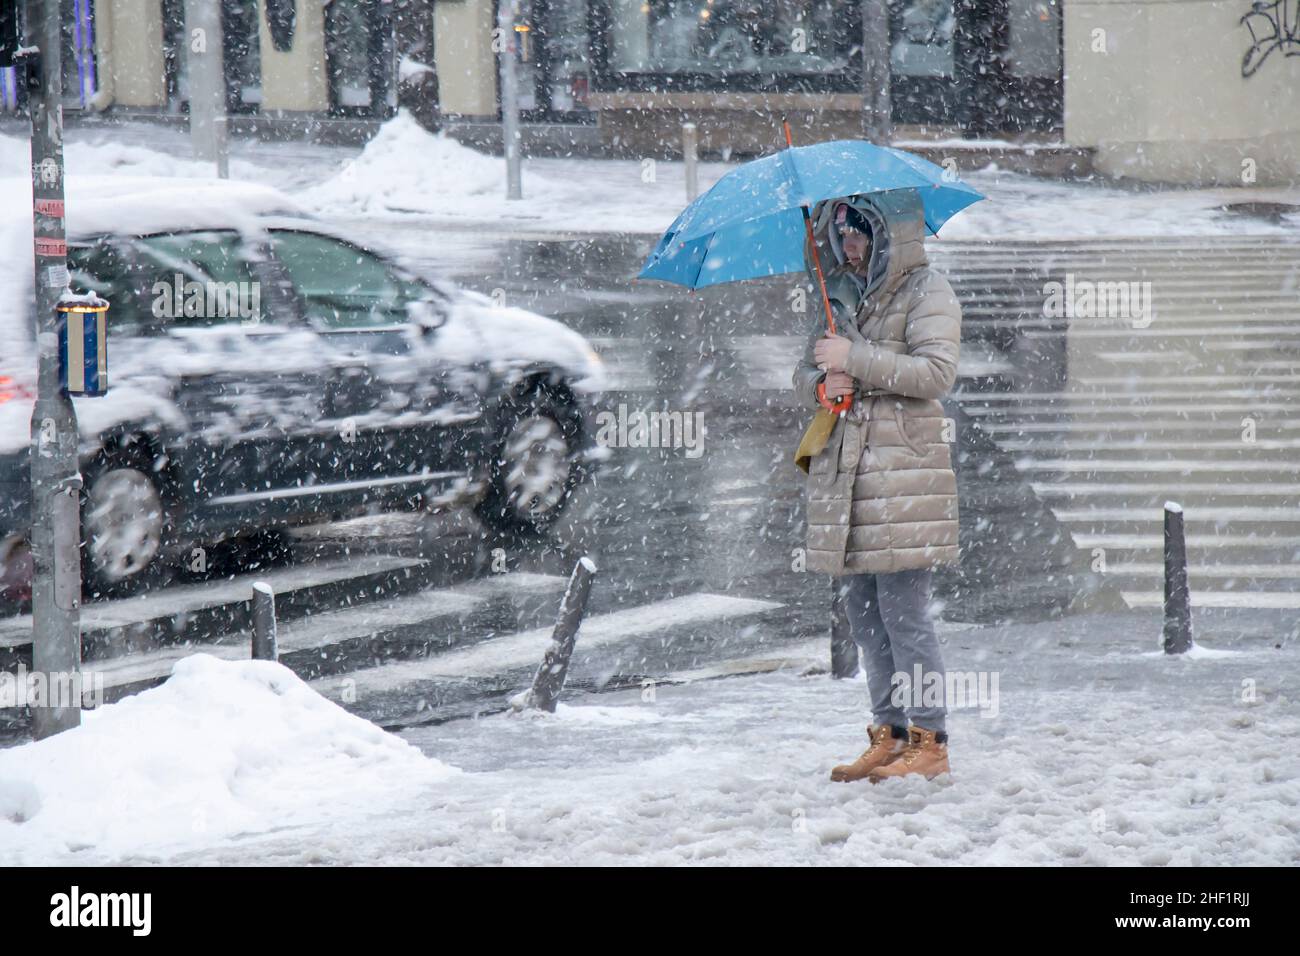 Belgrade, Serbia - January 11, 2022: Woman waiting at crossroad under blue umbrella on a snowy city street during heavy snow fall Stock Photo